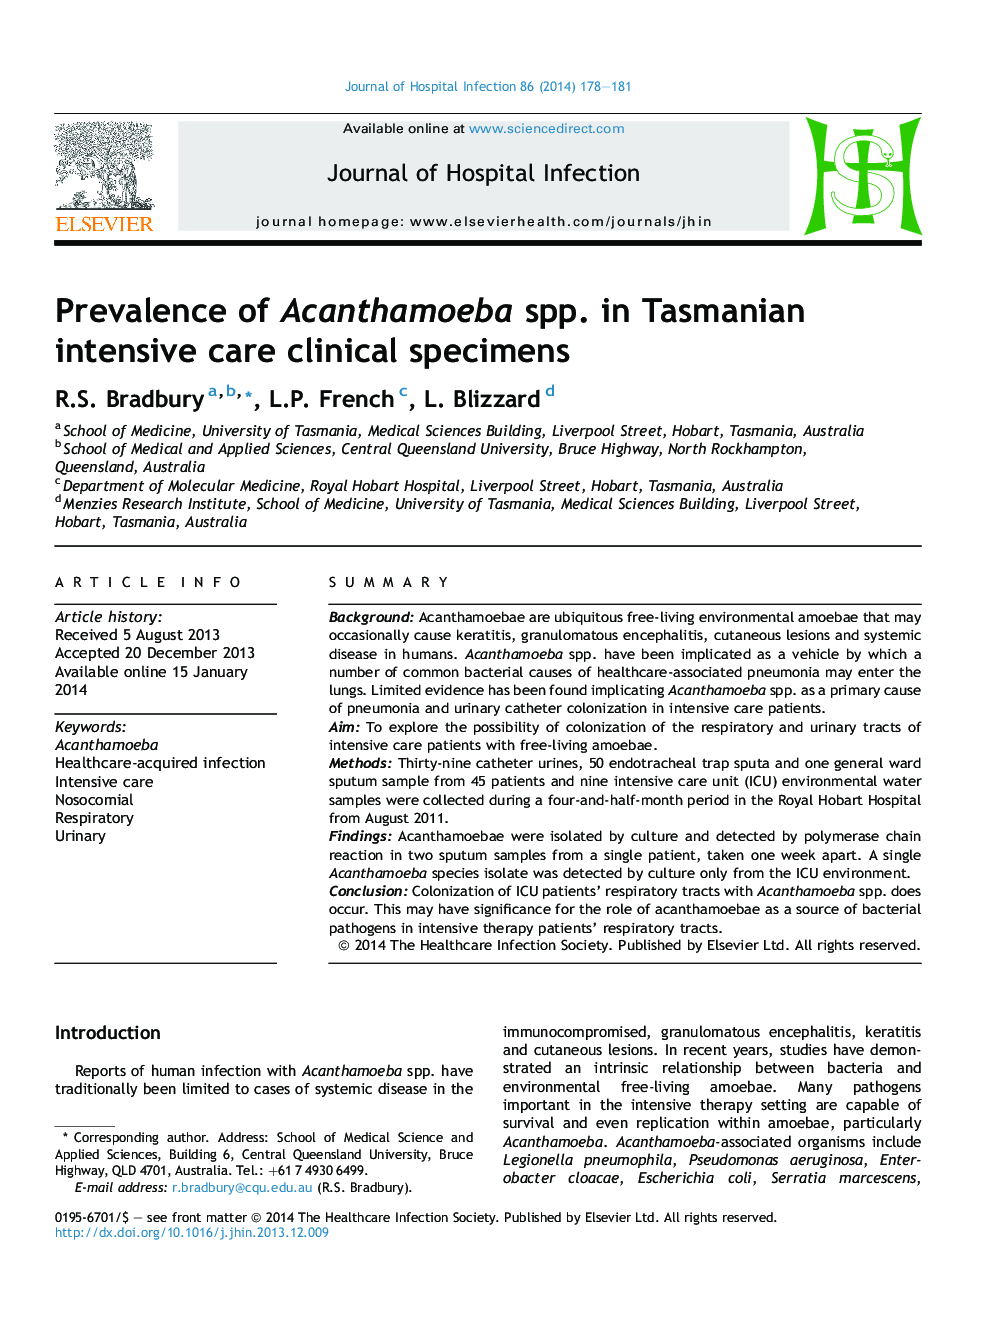 Prevalence of Acanthamoeba spp. in Tasmanian intensive care clinical specimens